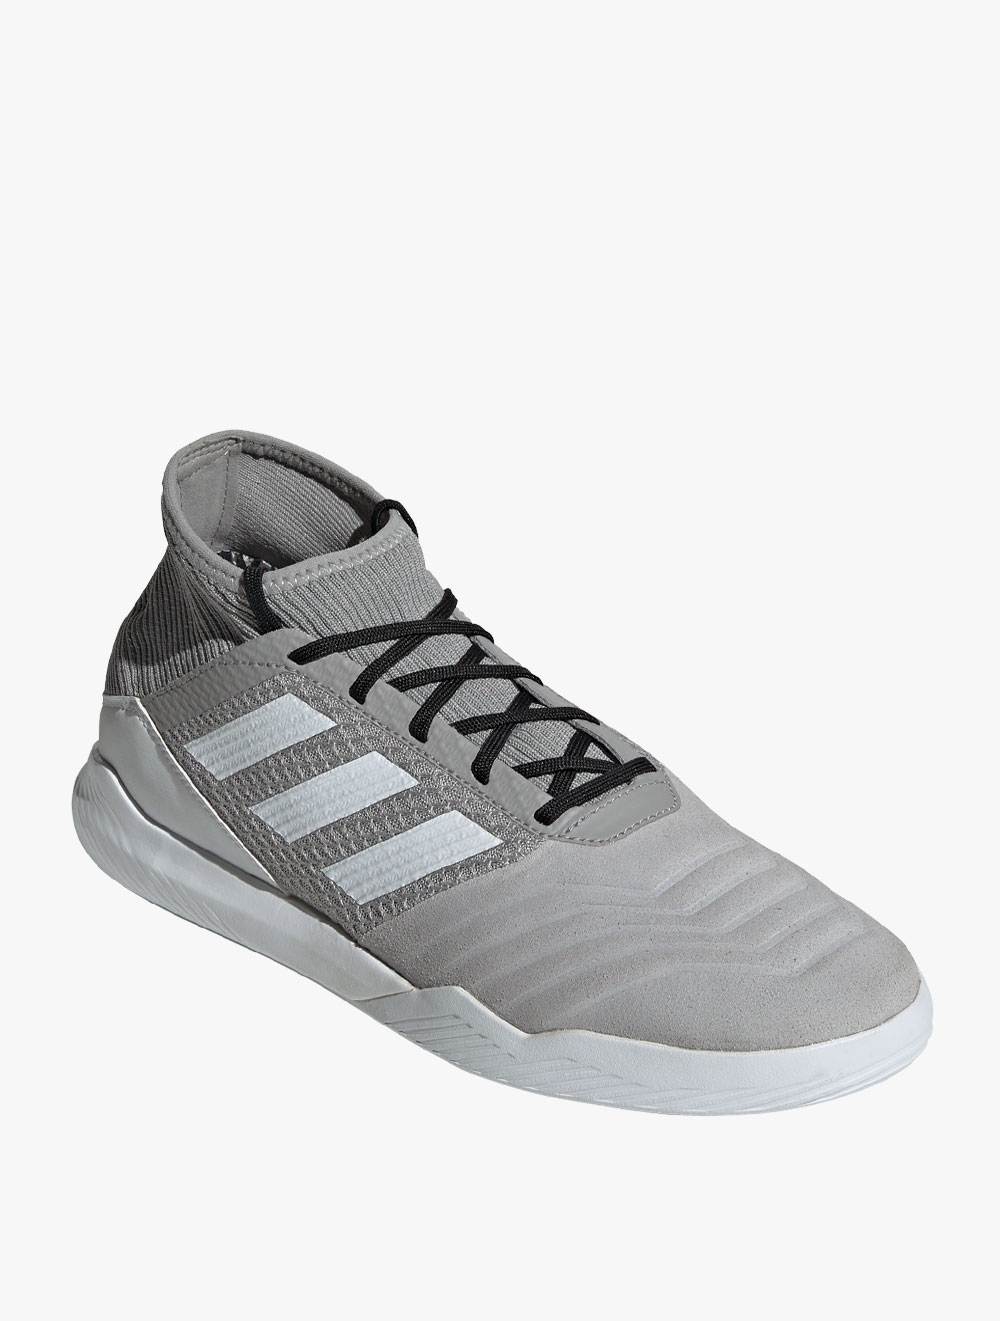 adidas predator 19.3 grey